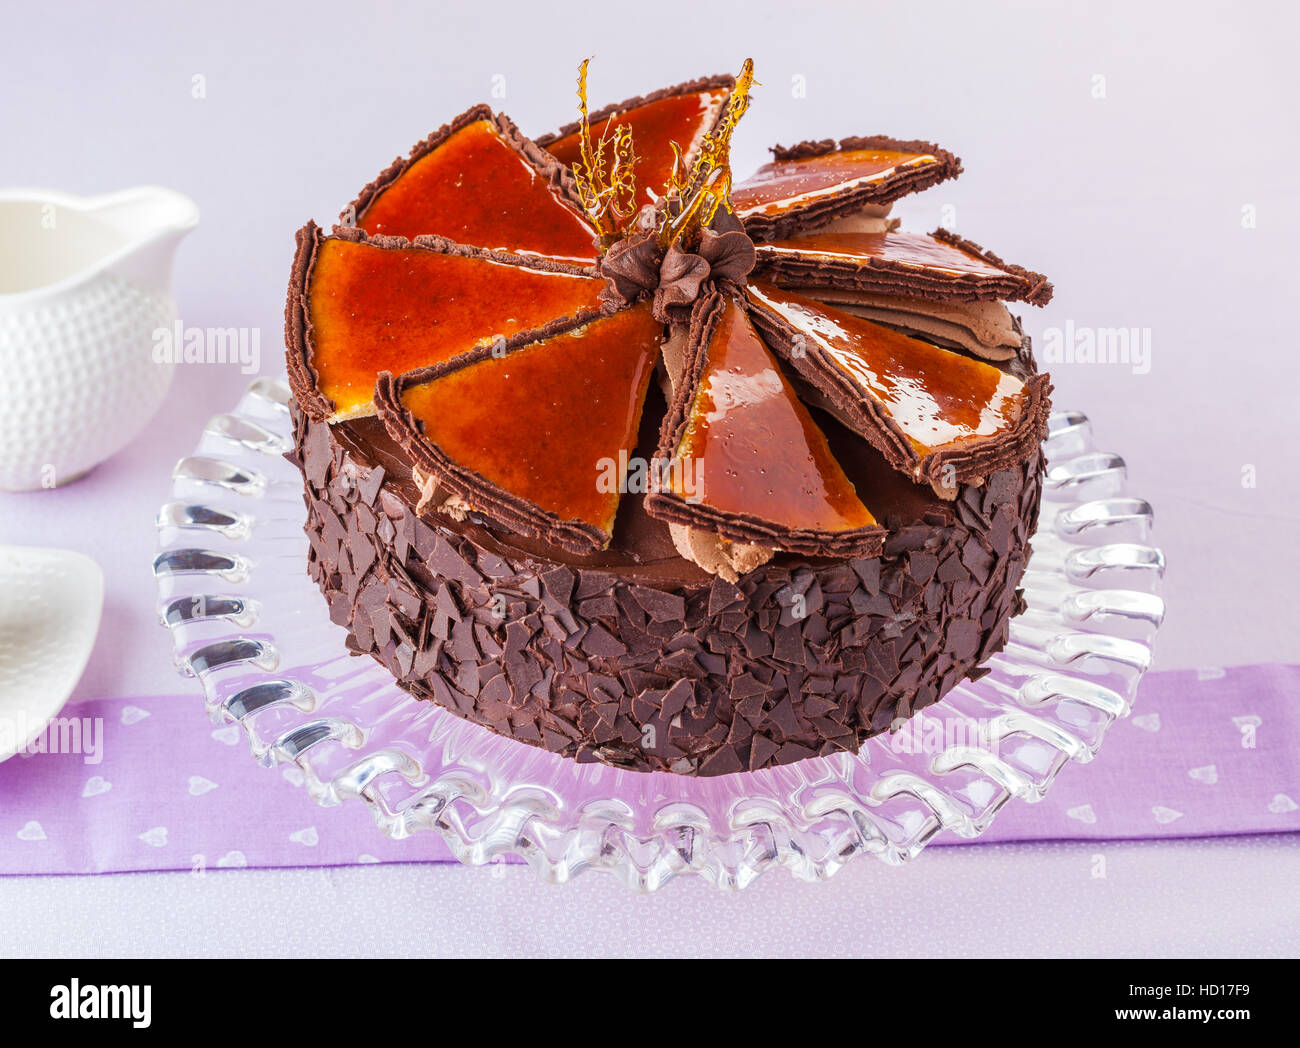 Hungarian Dobos torte, chocolate cake with caramelized top. Stock Photo